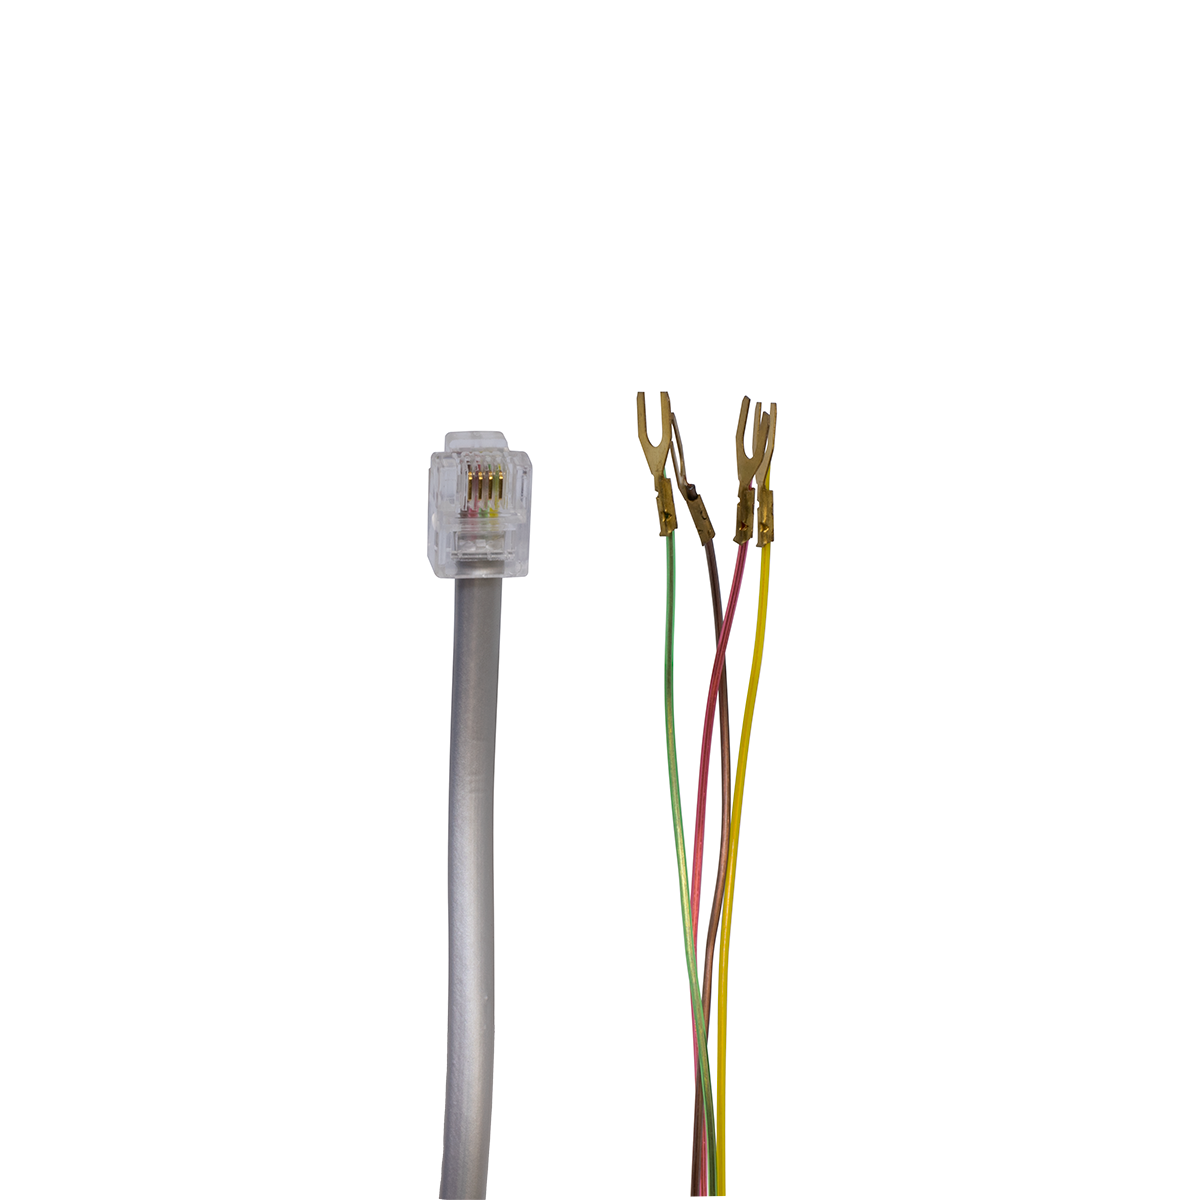 7' 4 Conductor (6P4C) Silver Spade to Modular Telephone Line Cord (Plug/Spade View)